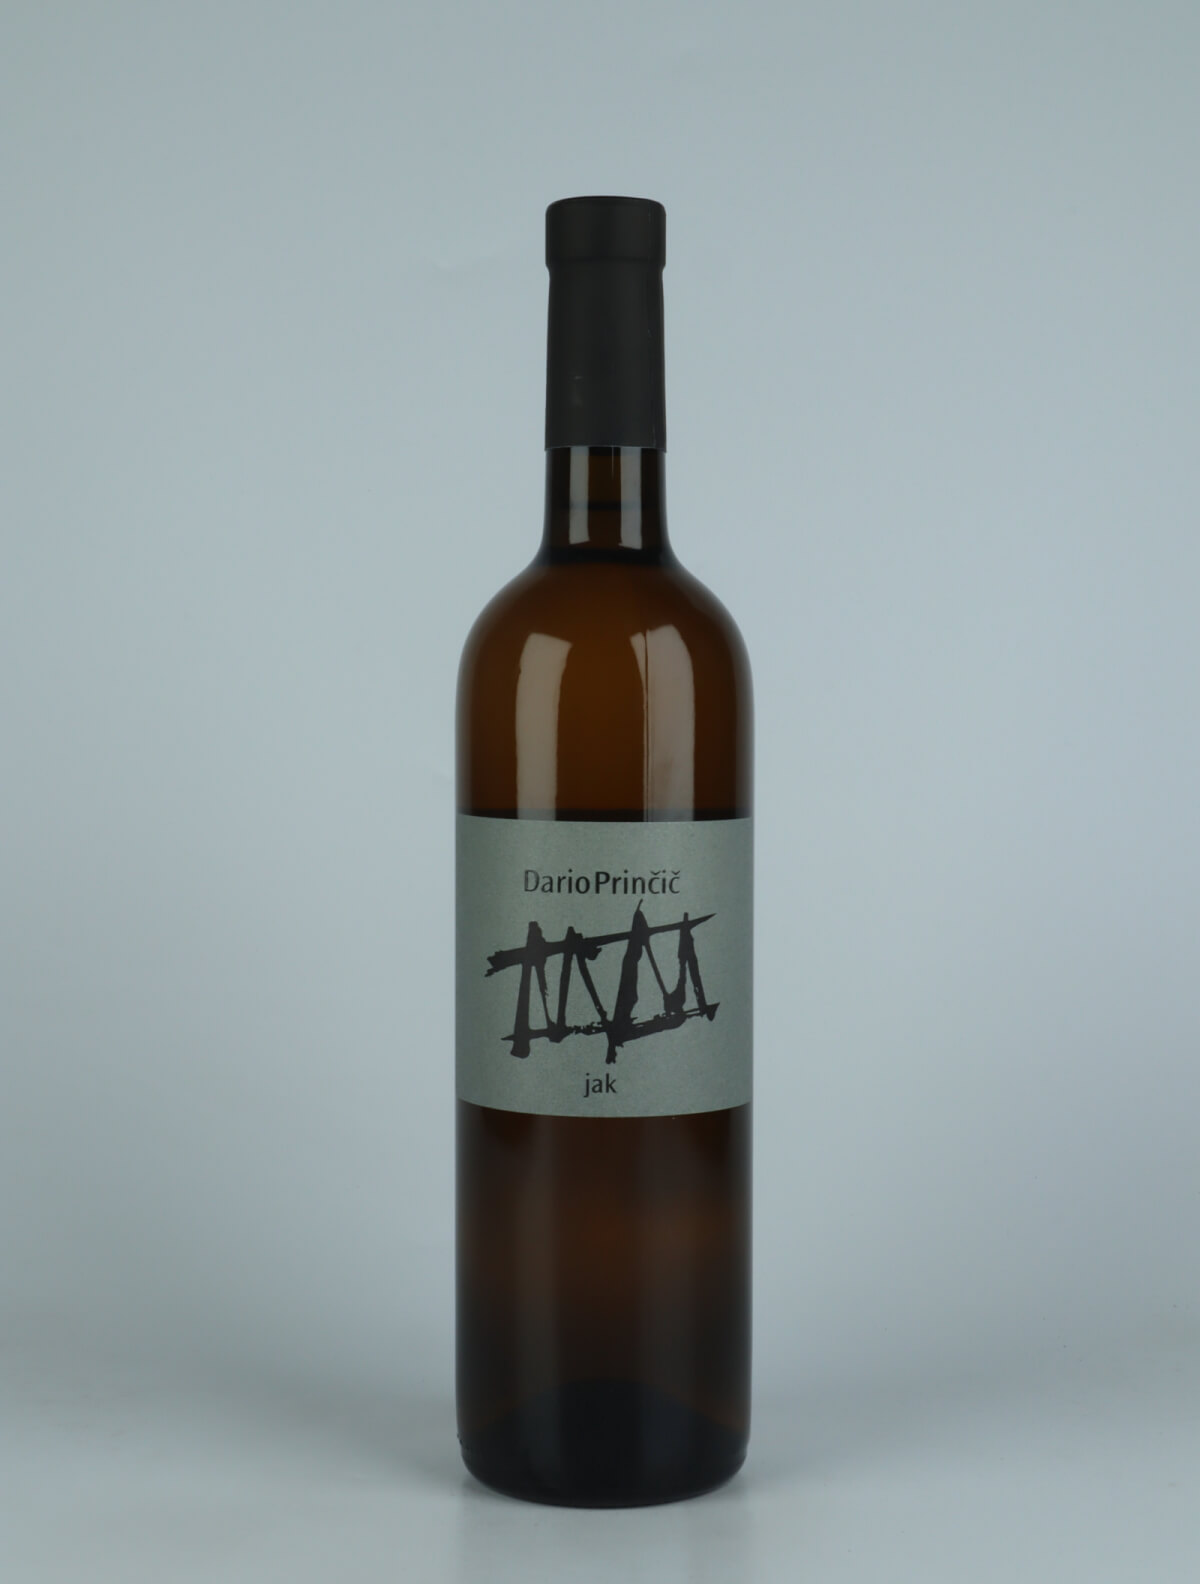 En flaske 2020 Jak Orange vin fra Dario Princic, Friuli i Italien